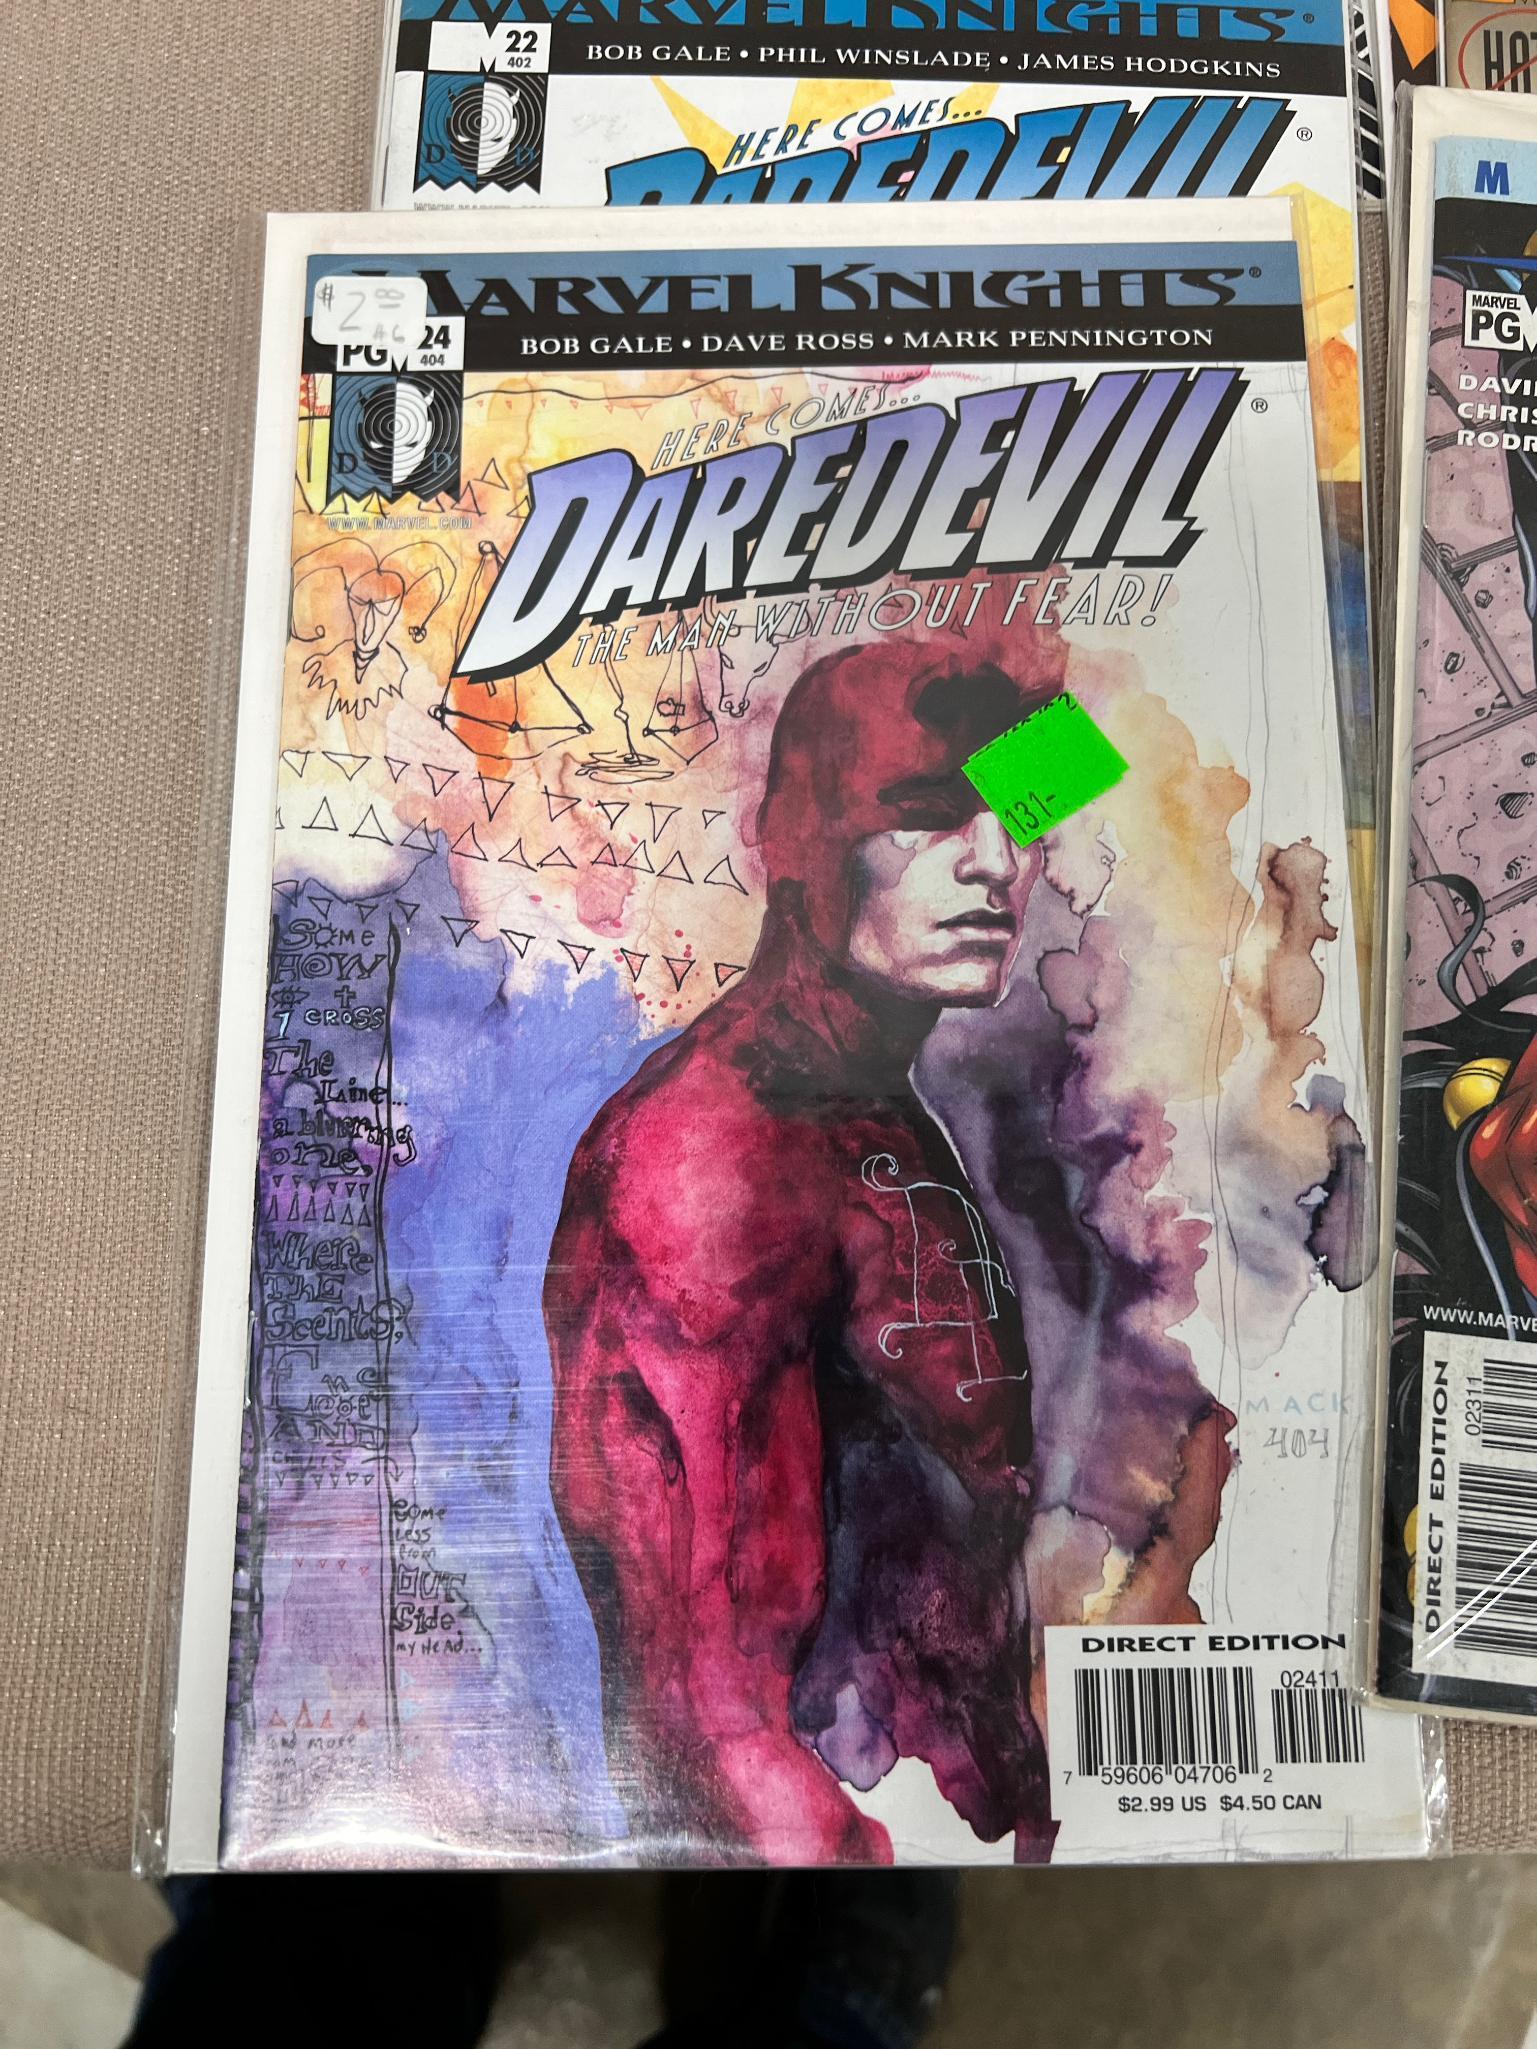 21- Asst. Marvel Comic Books, Daredevil, Captain Britain and more